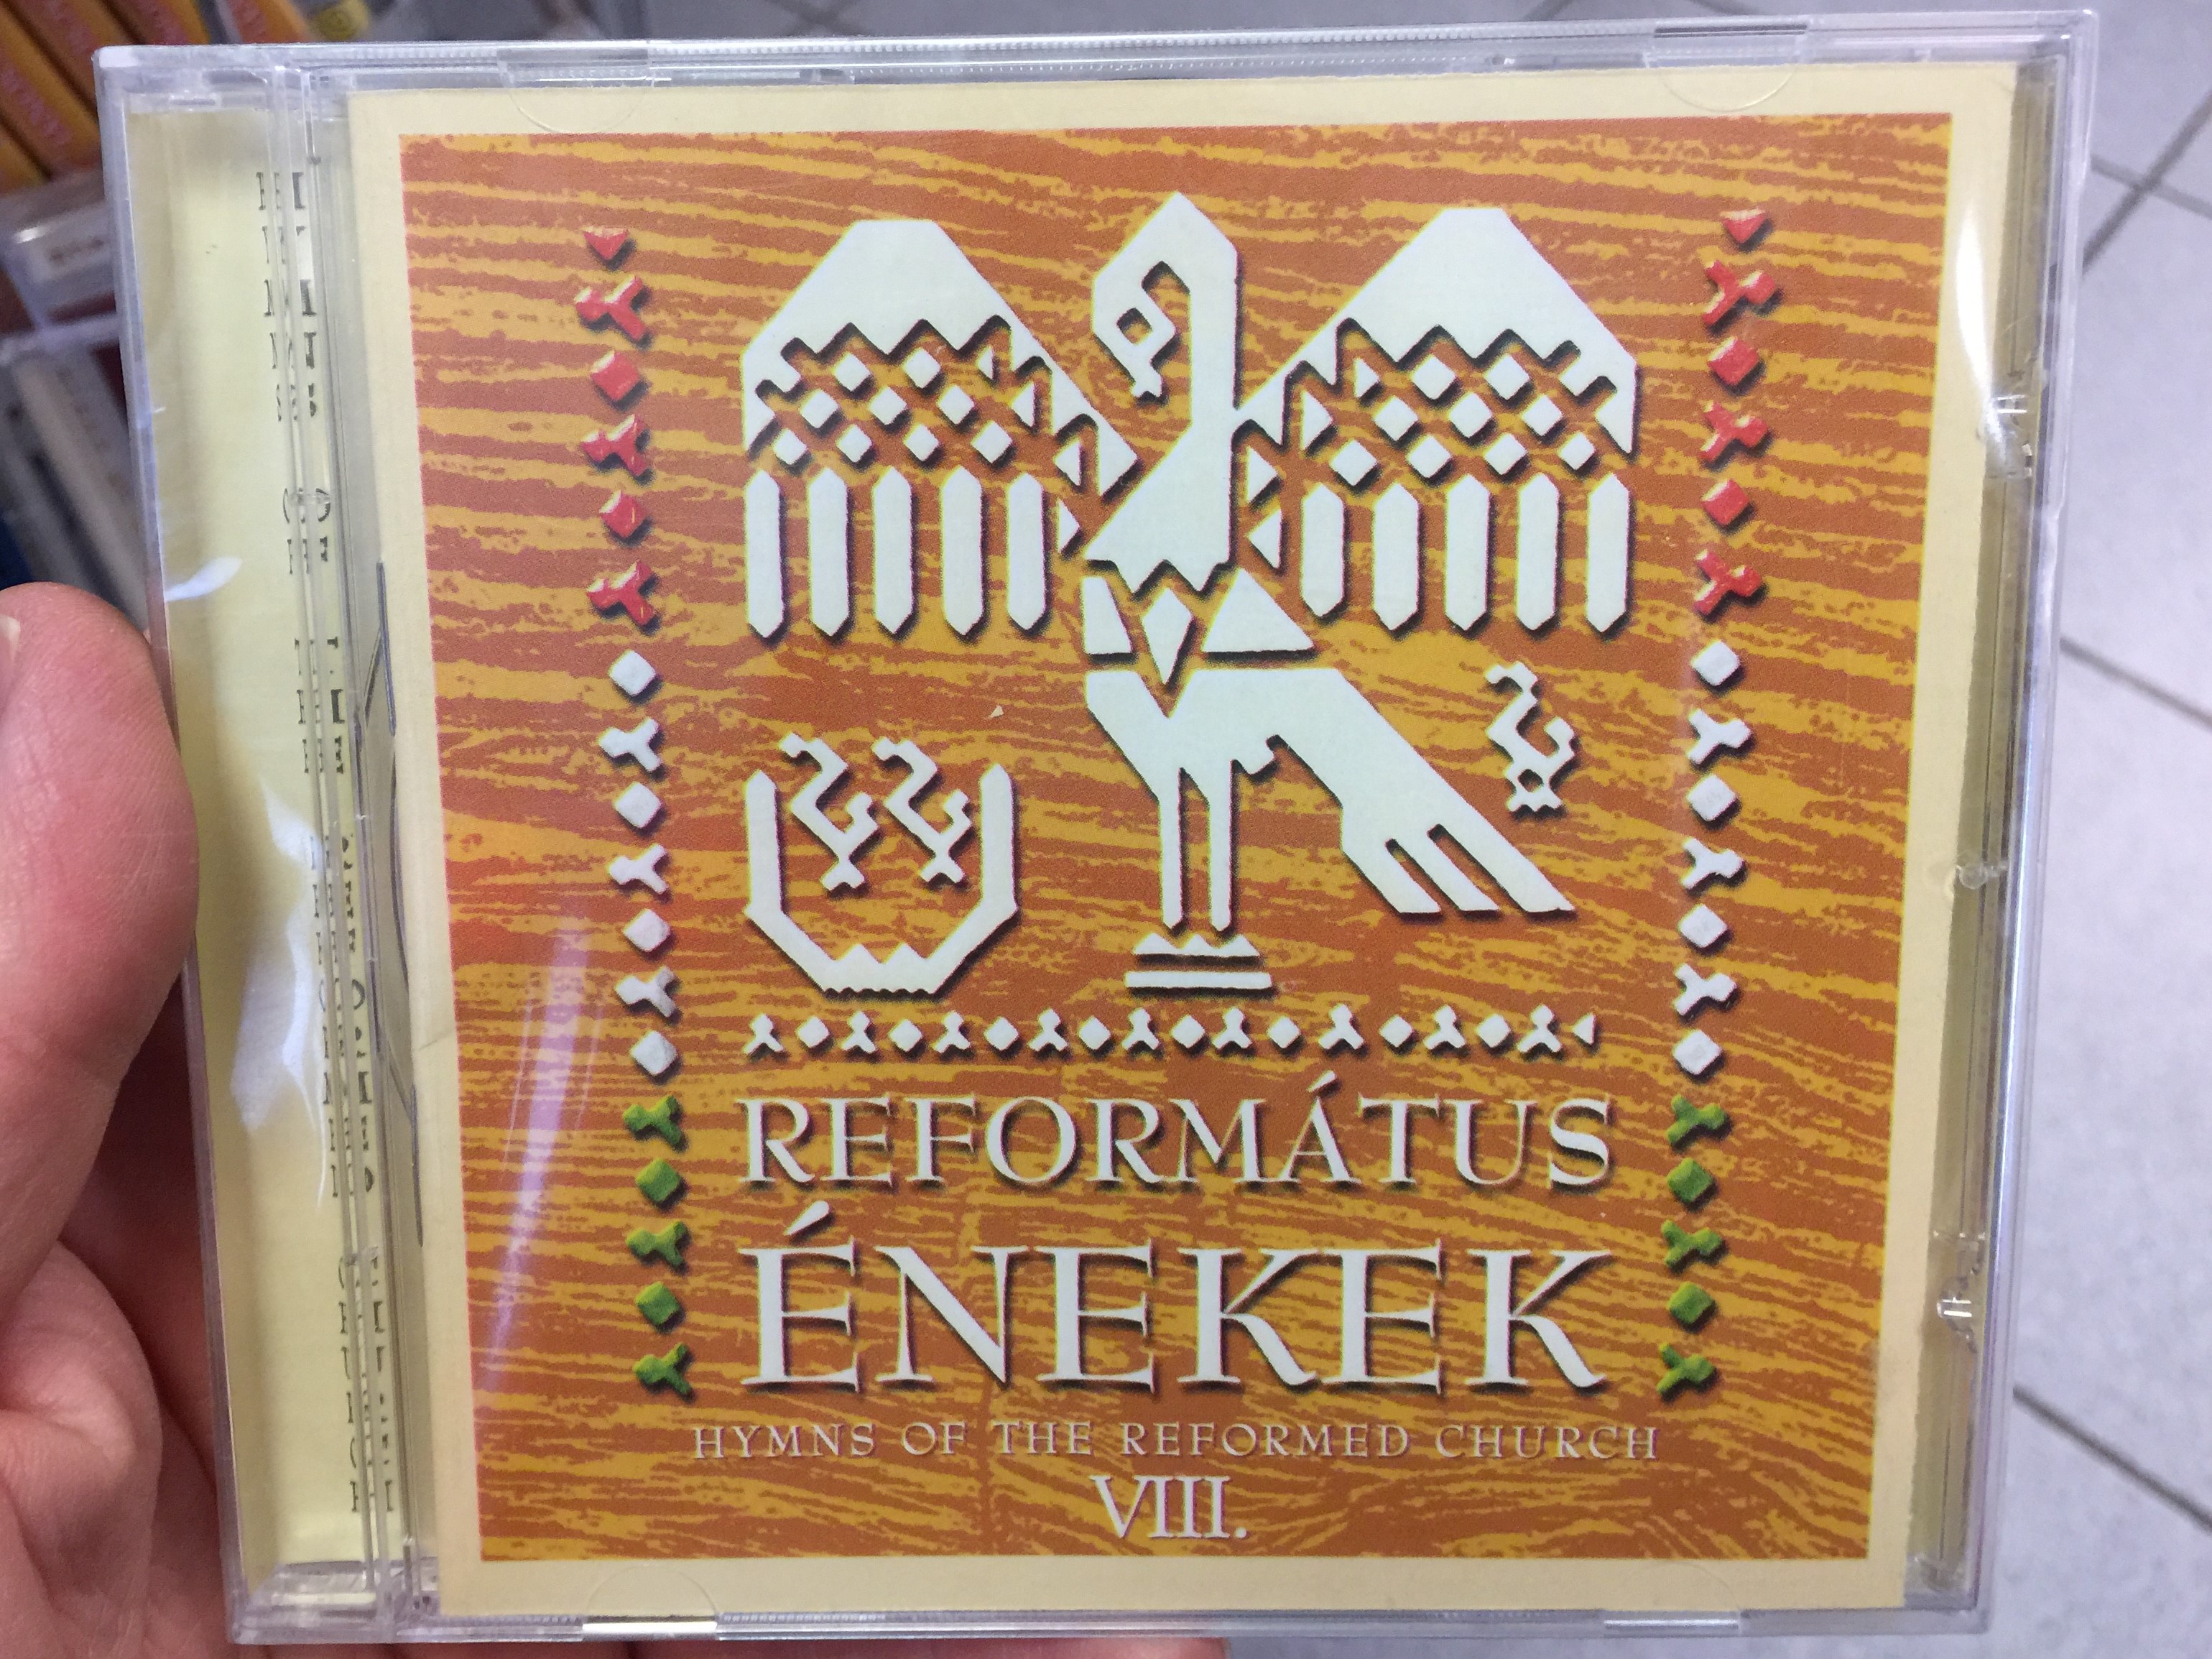 reform-tus-nekek-8.-audio-cd-2009-hymns-of-the-reformed-church-viii.-1.jpg